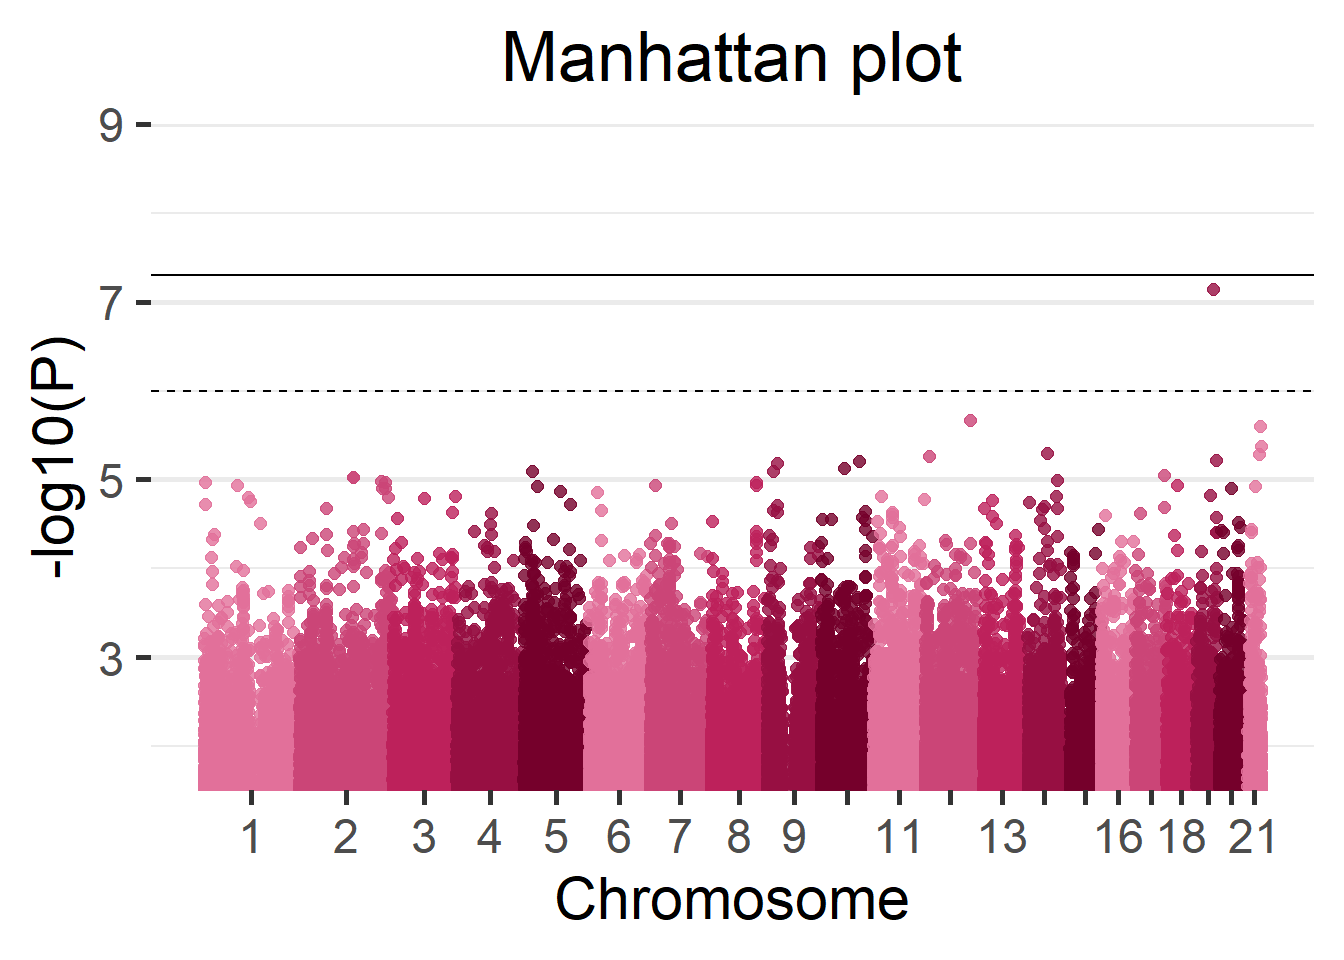 Manhattan plot of the meta-analysis results.